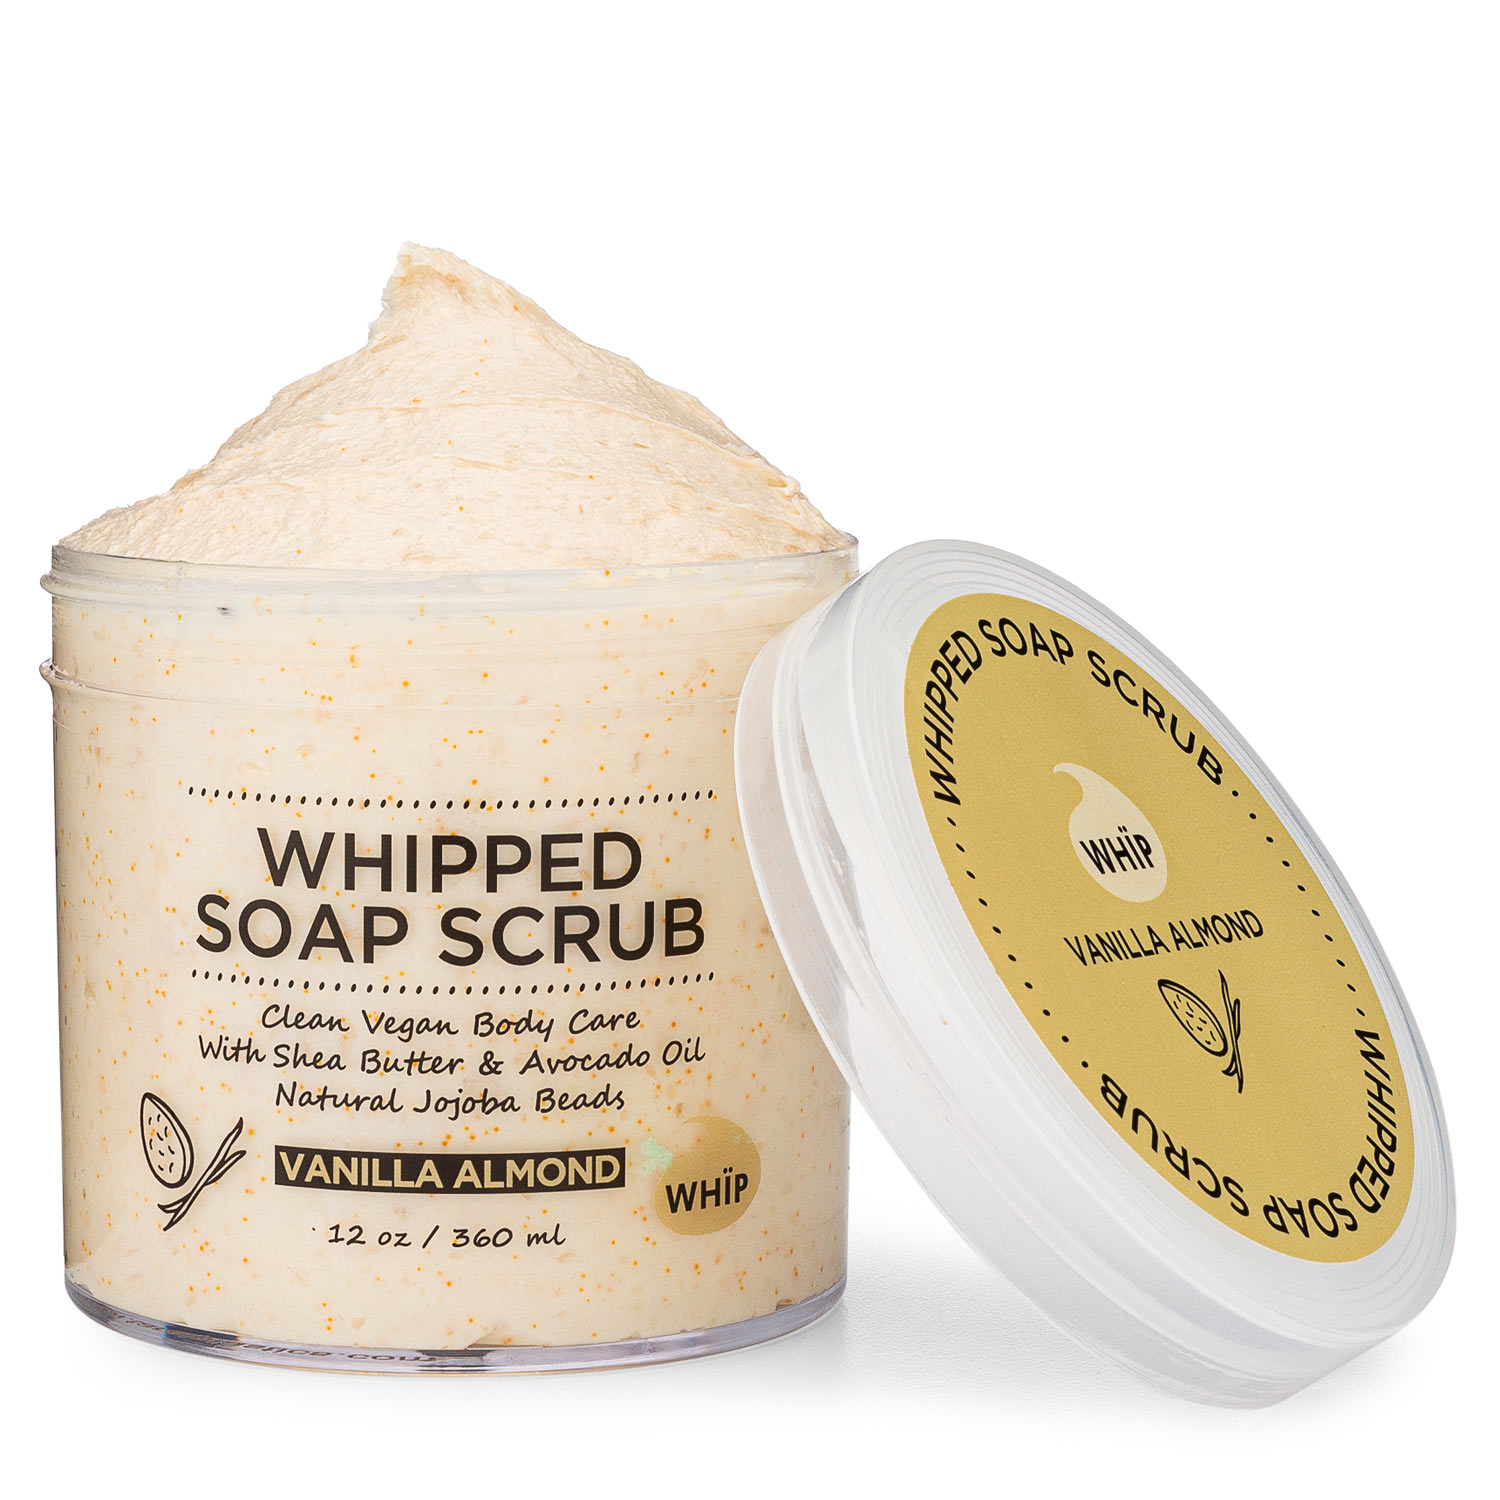 Whipped-Soap-Scrub---Vanilla-Almond-WHÏP